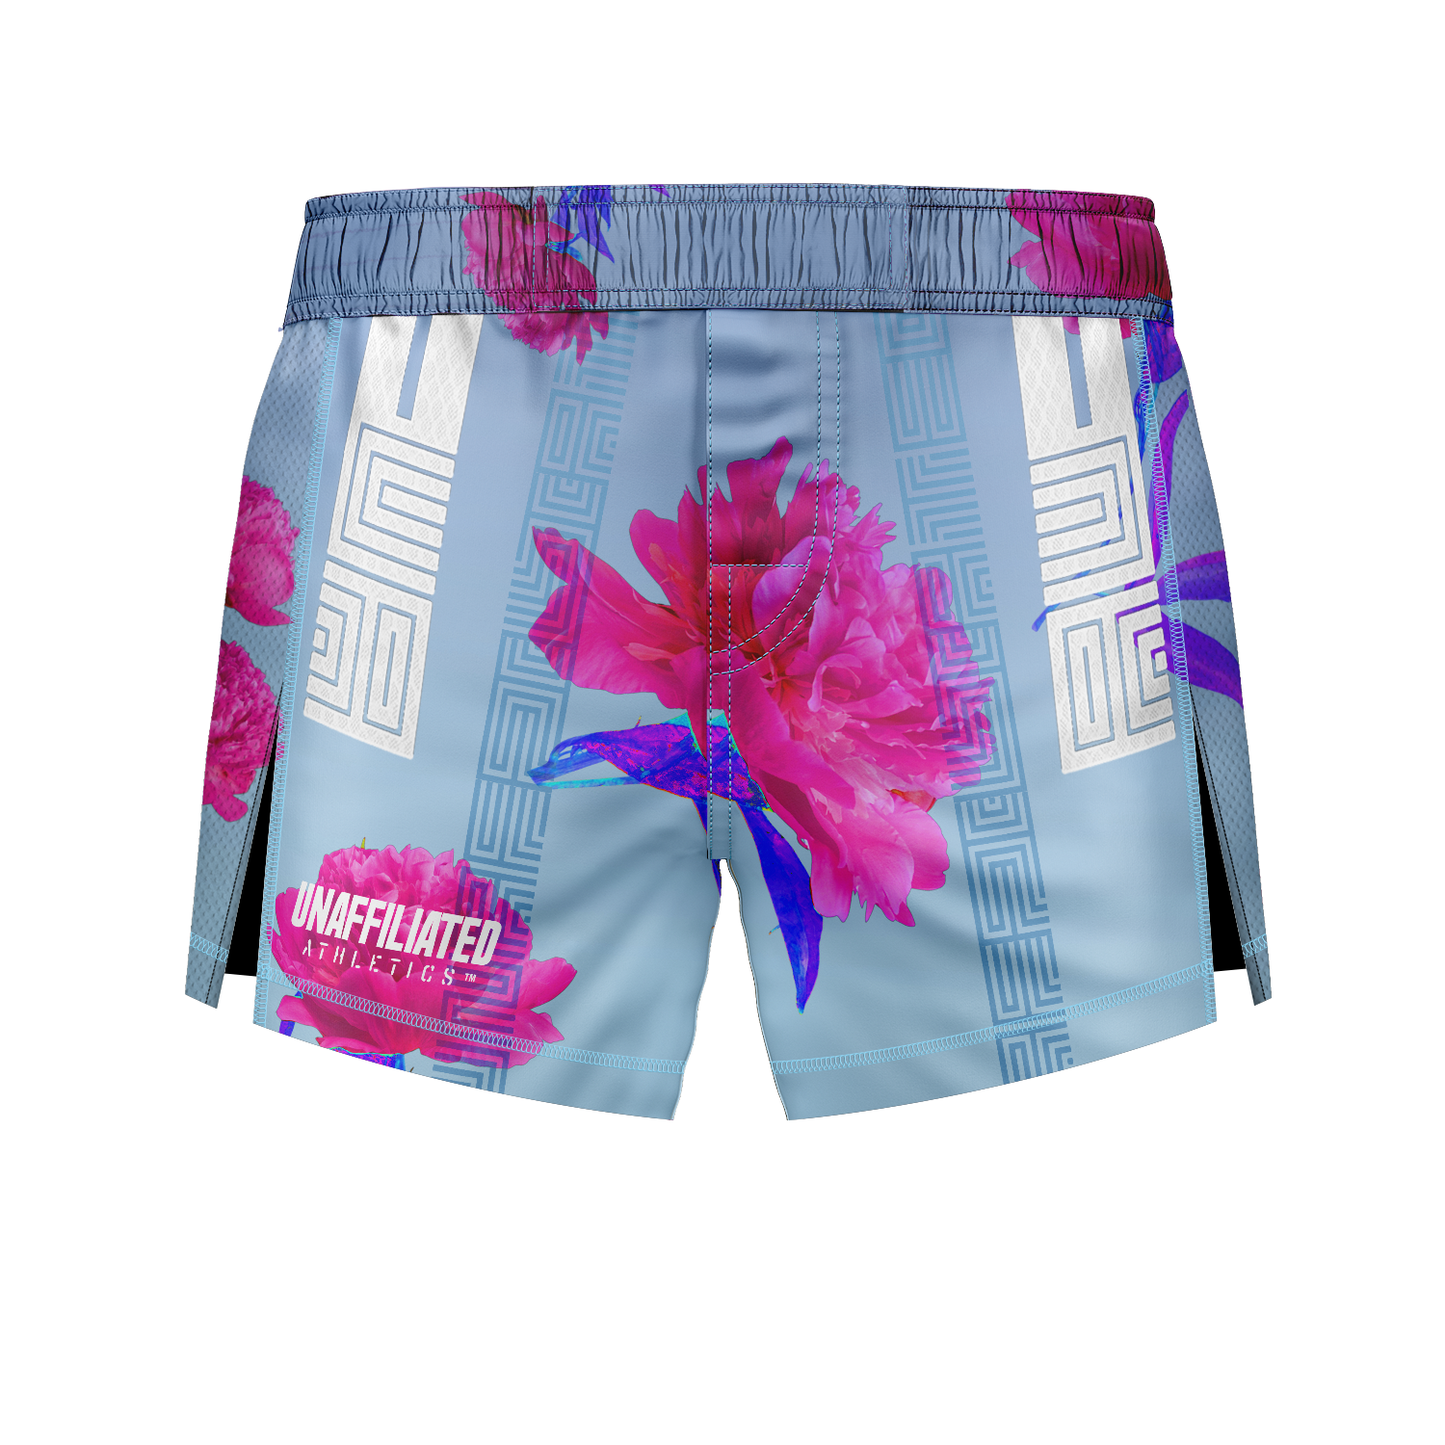 Unaffiliated Athletics muay thai shorts Summer Floral, light  blue